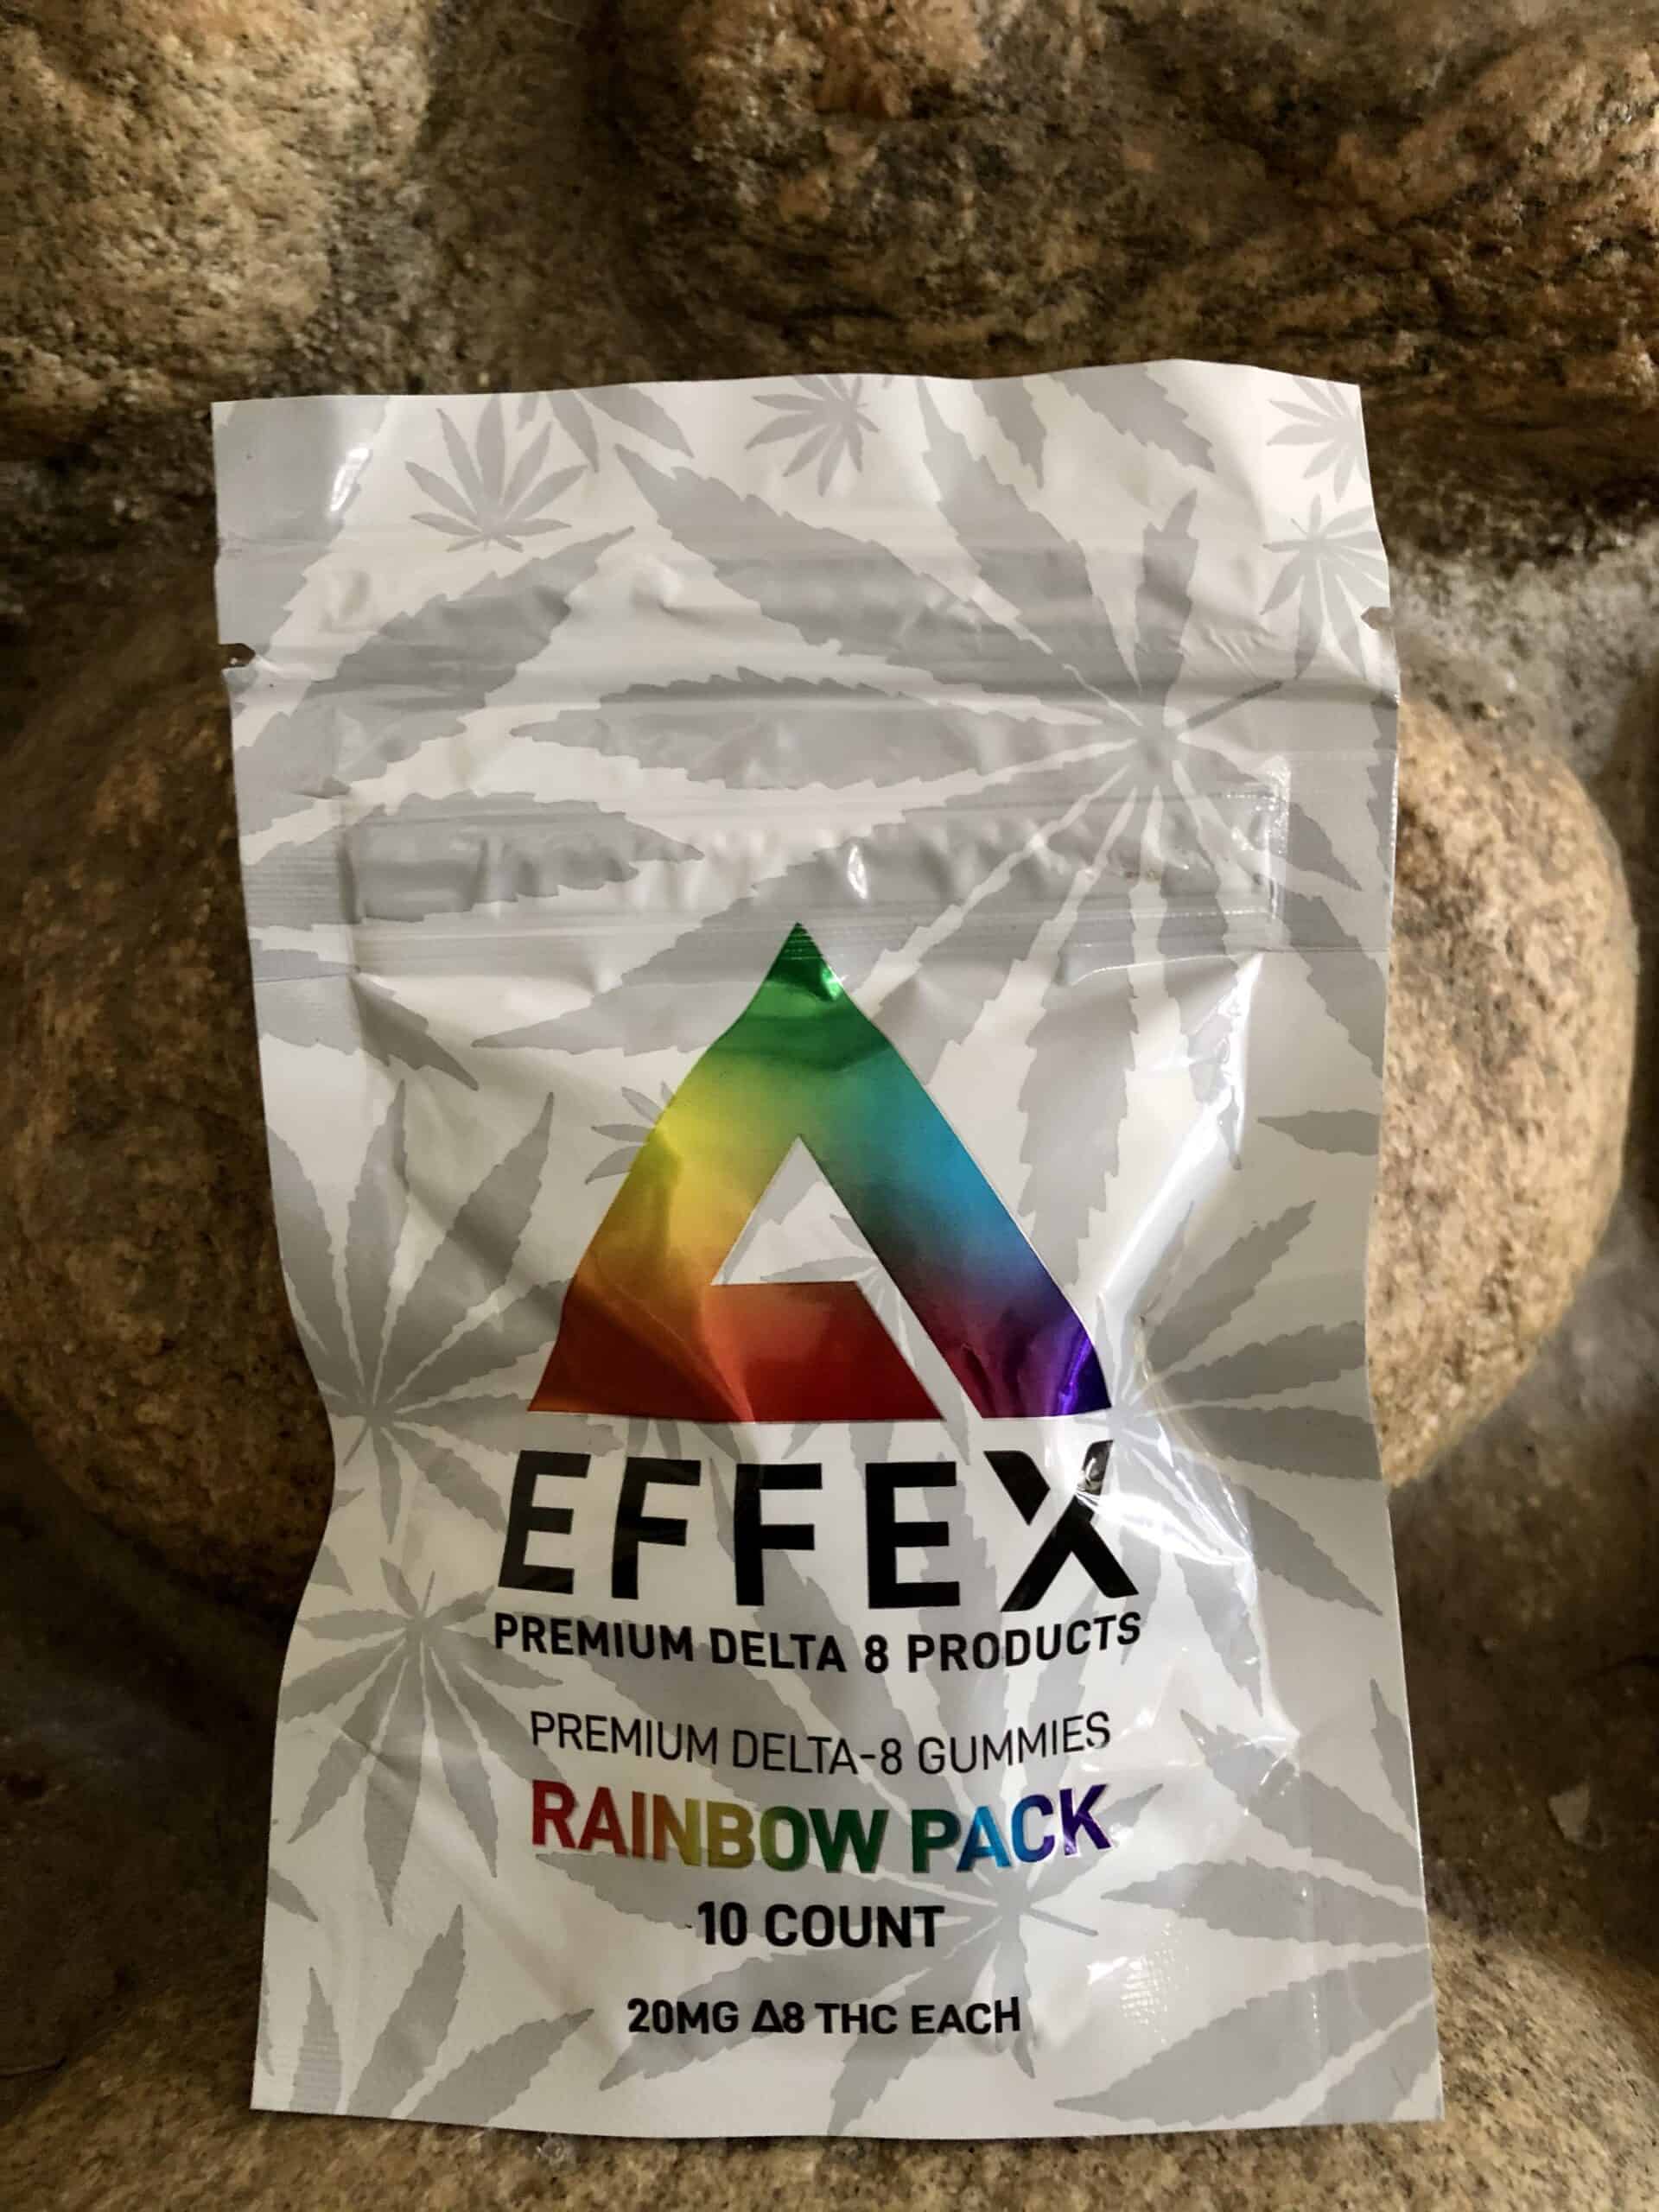 Delta Effex Rainbow Pack Premium Delta 8 THC Gummies Save On Cannabis Review